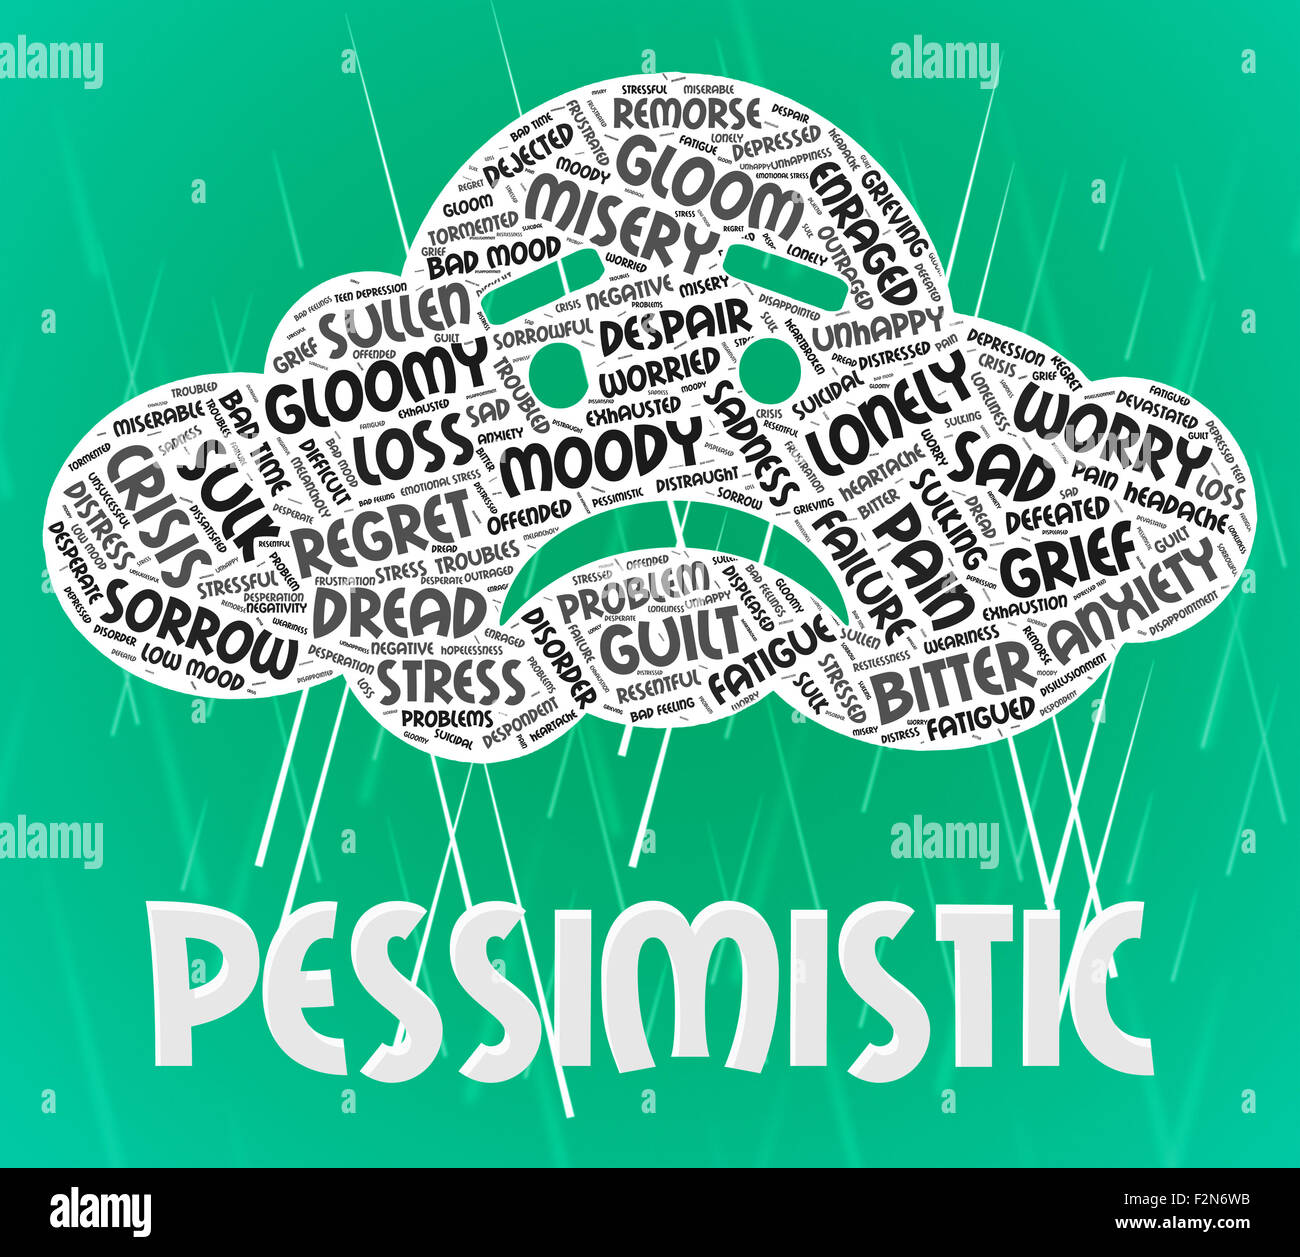 Pessimistic Word Indicating Pessimists Defeatist And Glum Stock Photo